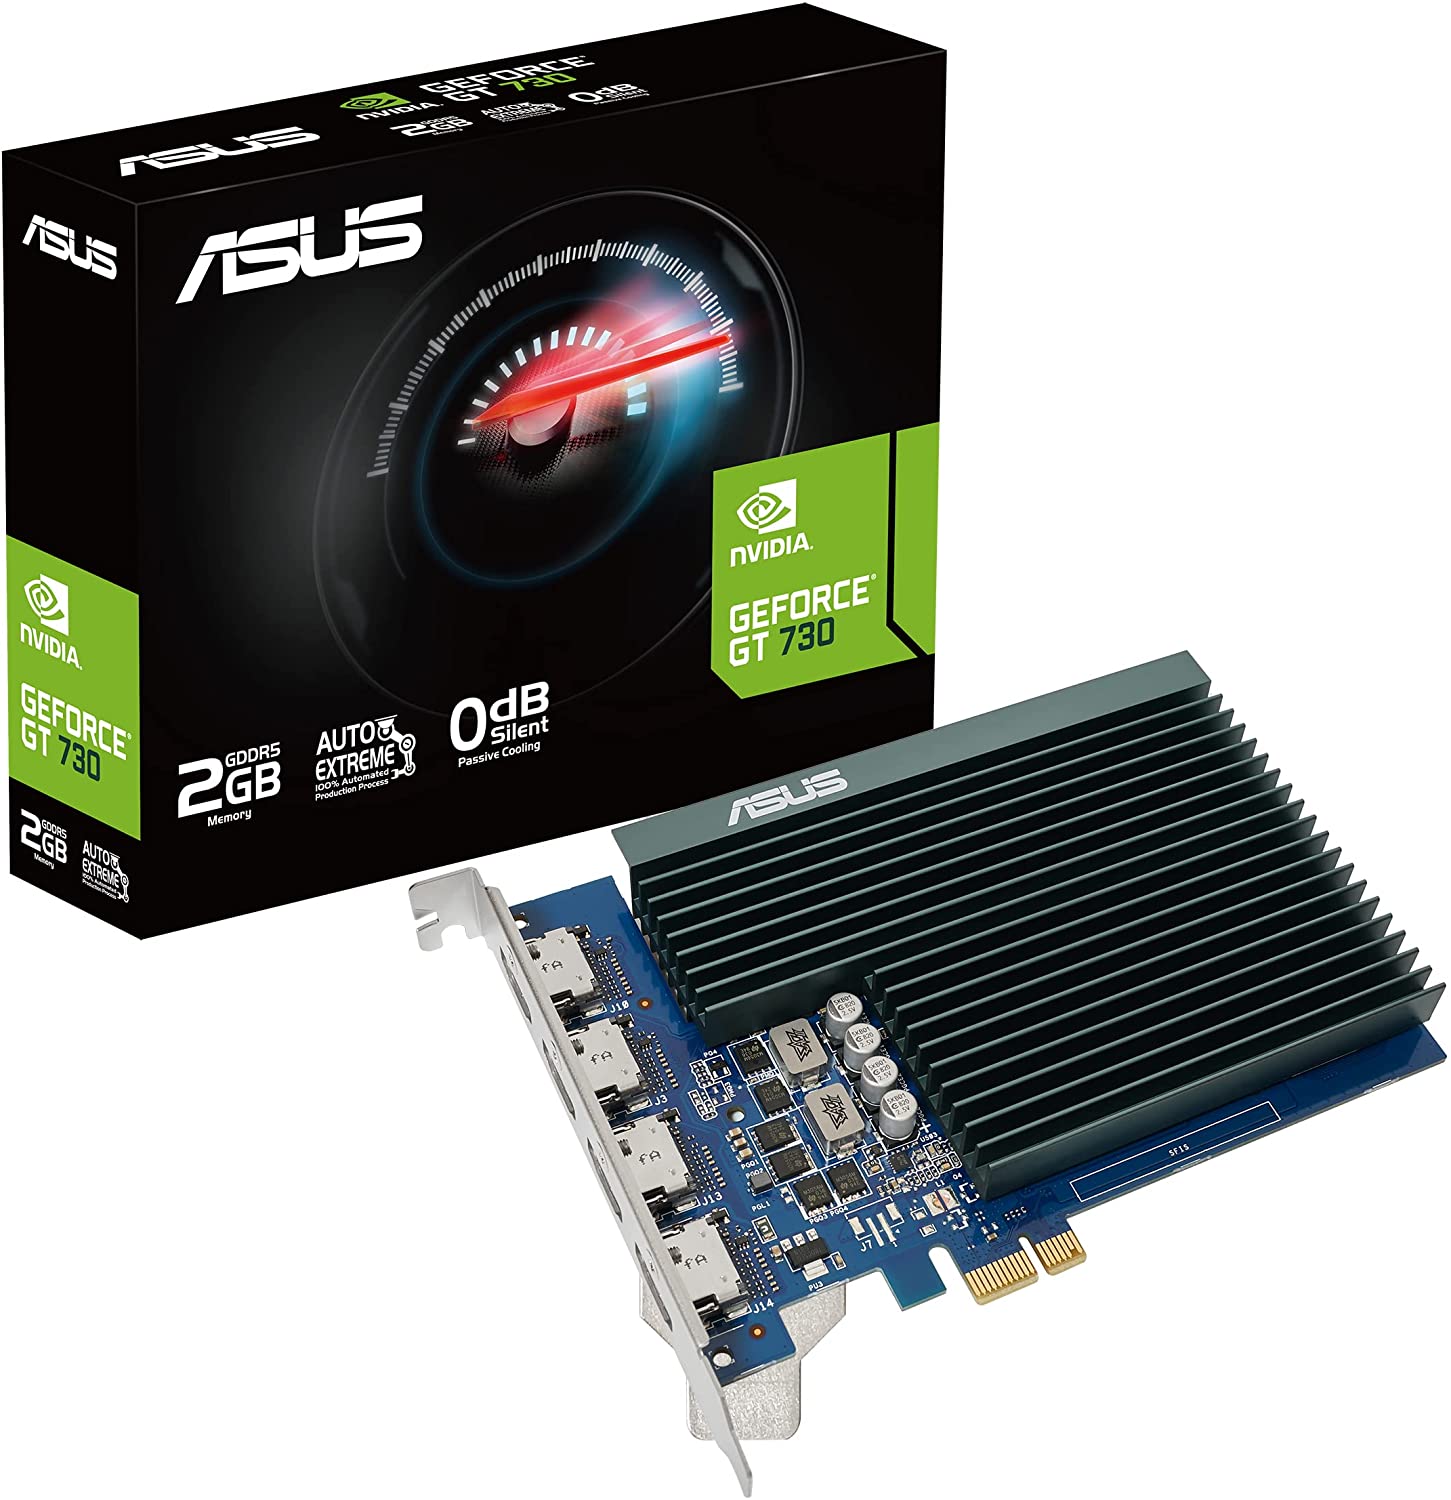 VD ASUS GEFORCE GT730 2GB SILENT 4 MONITOR PCIe